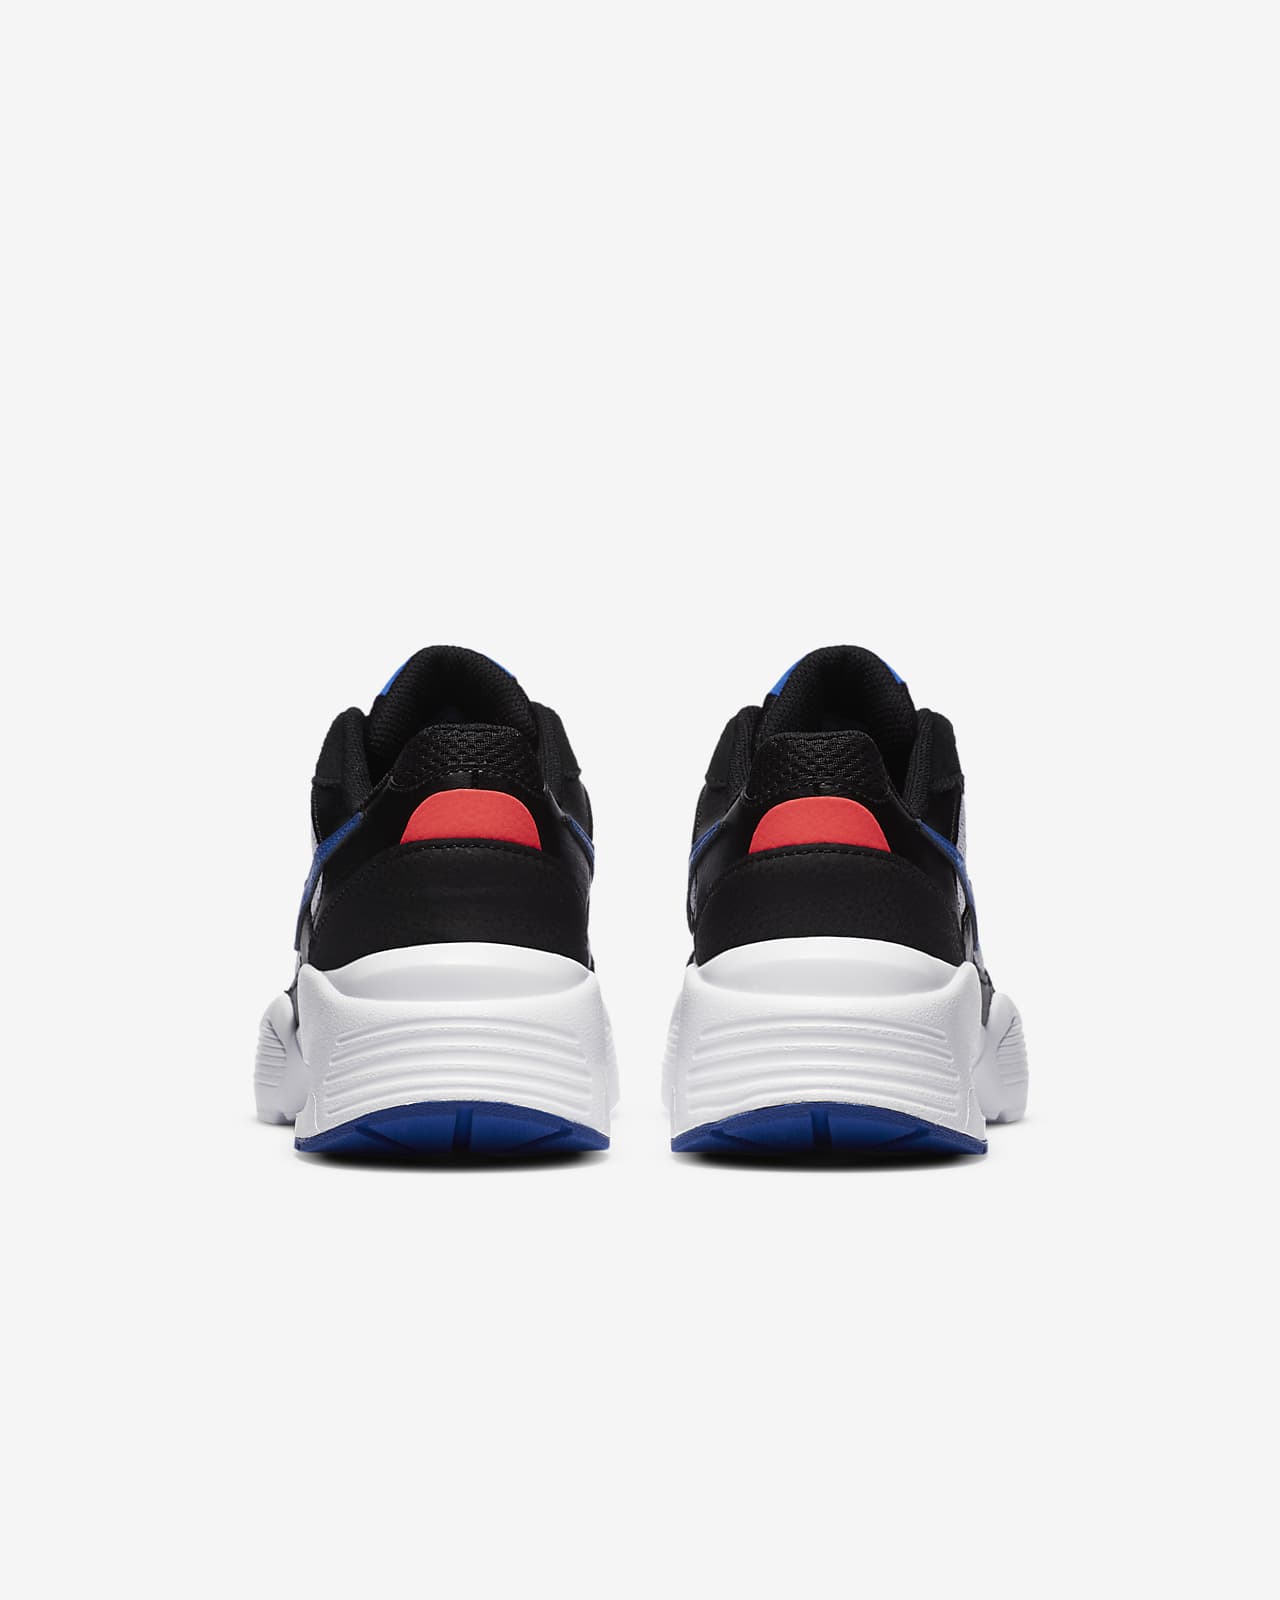 Nike Air Max Fusion Men's Shoes. ID